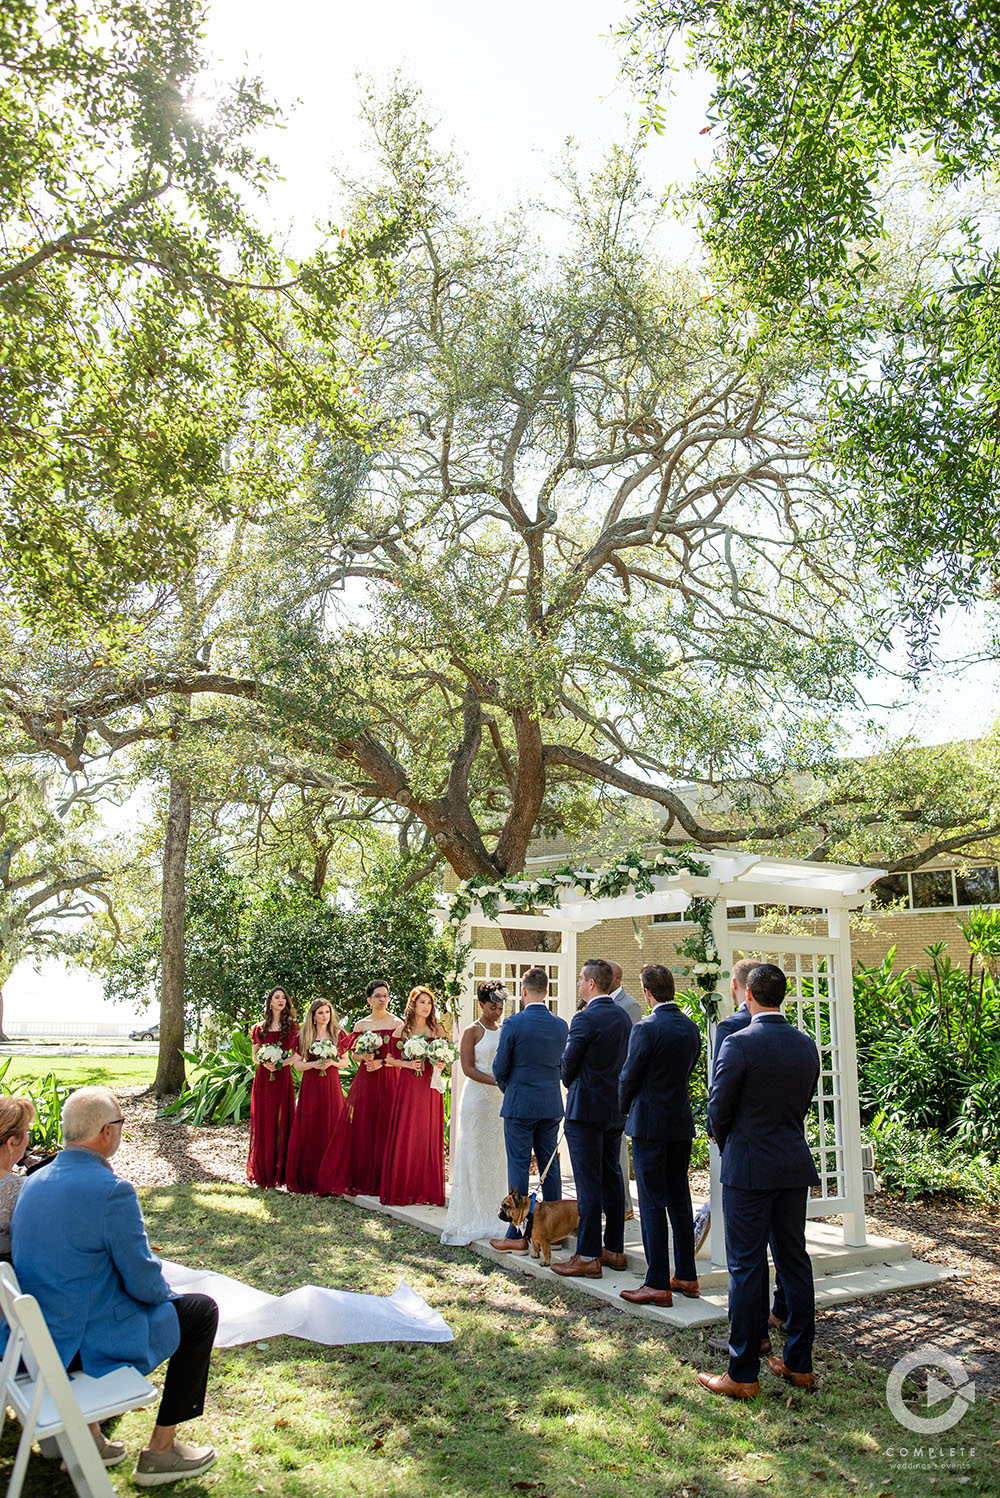 wedding ceremony outdoors under trees